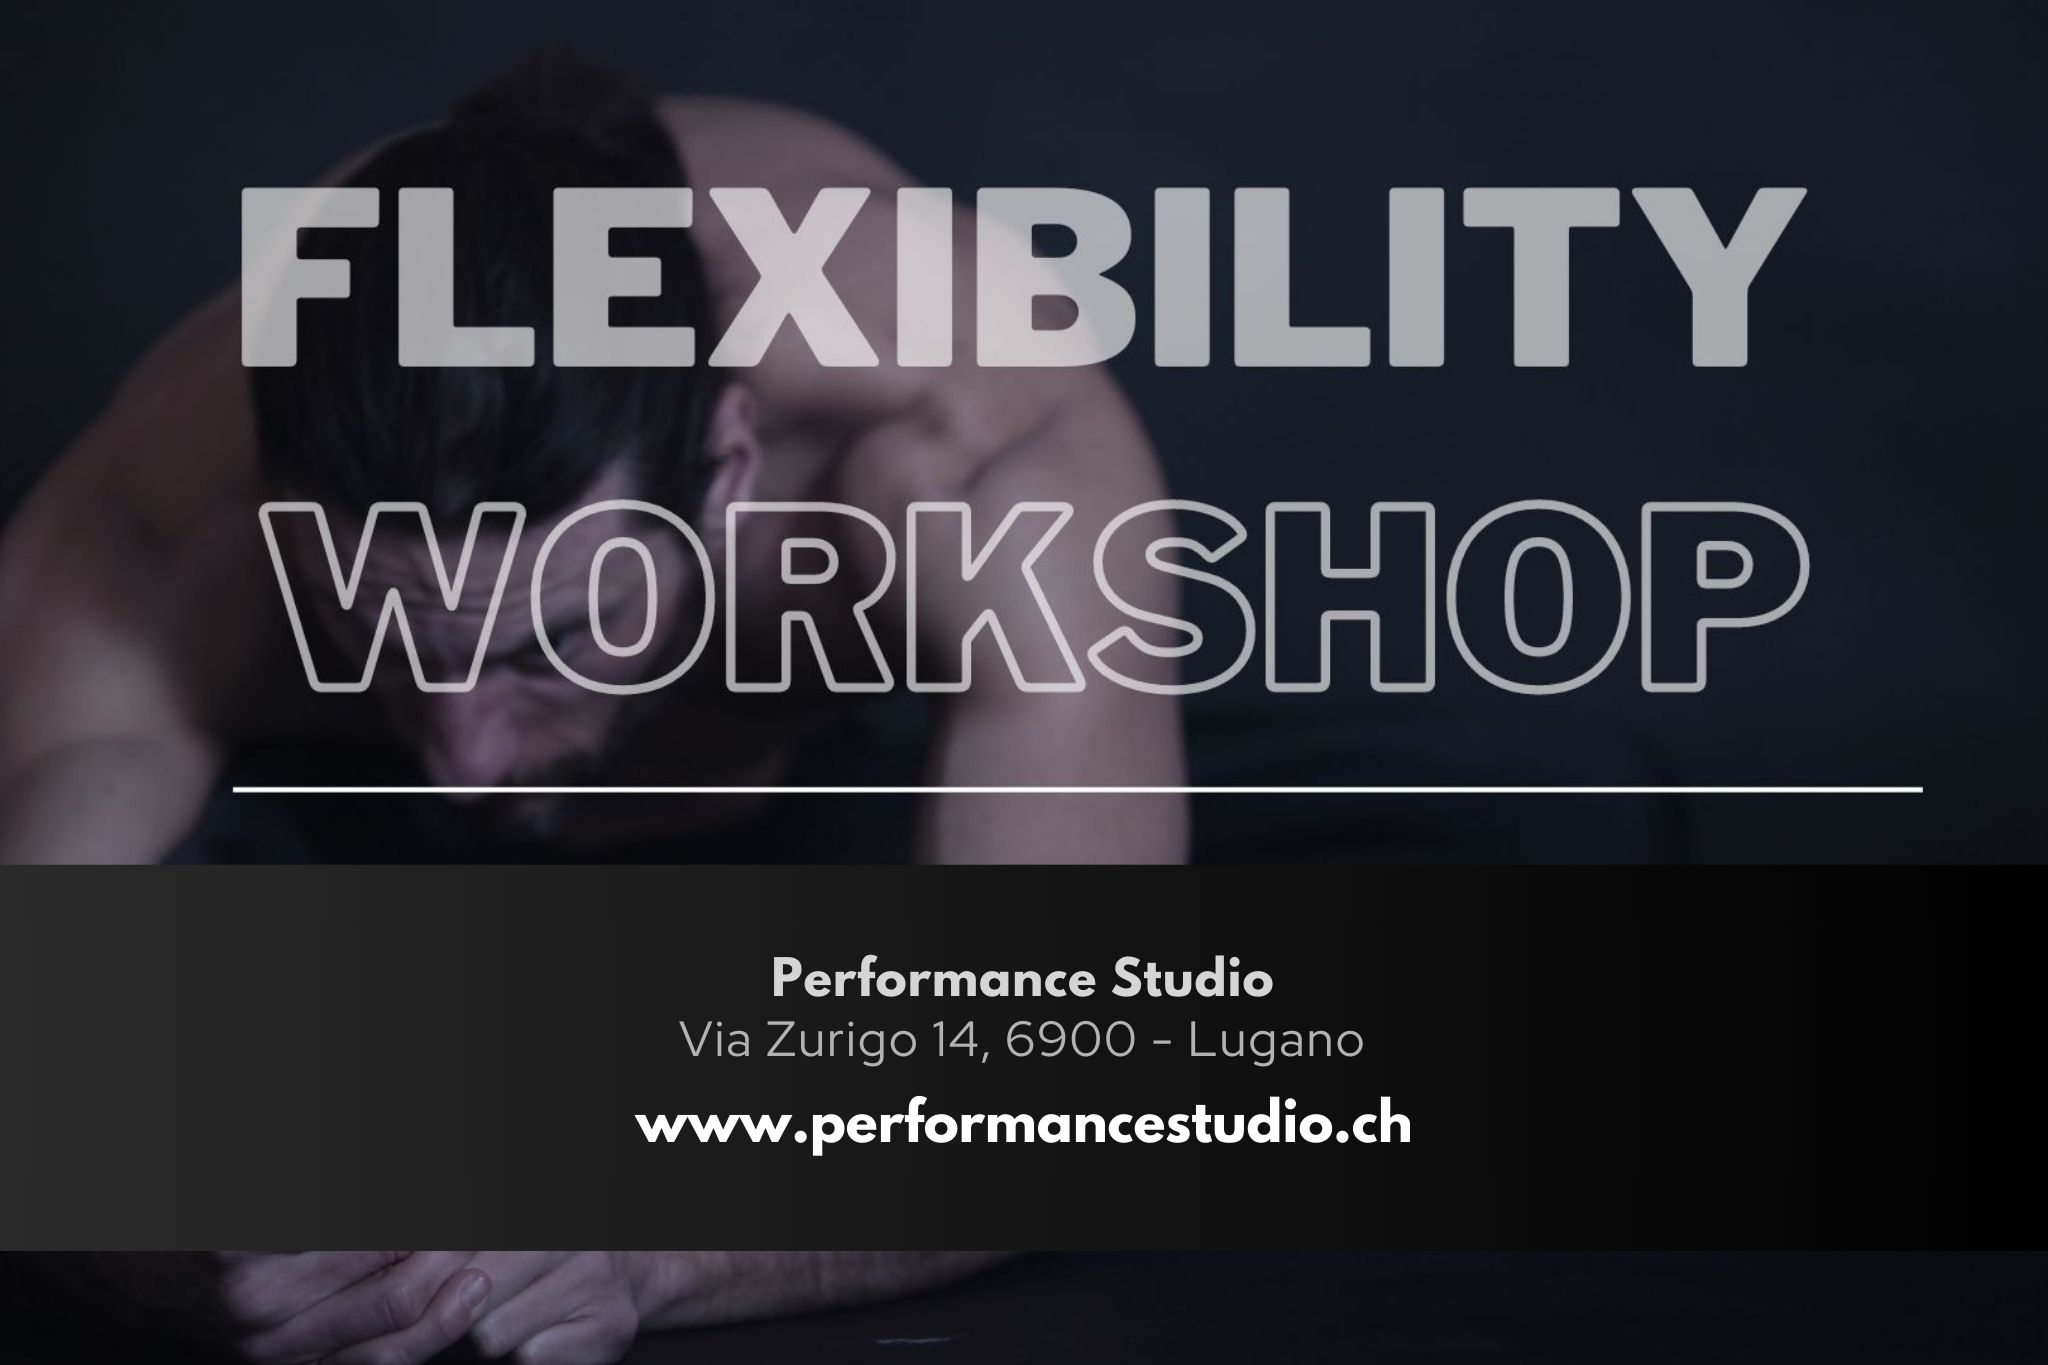 Flexibility workshop